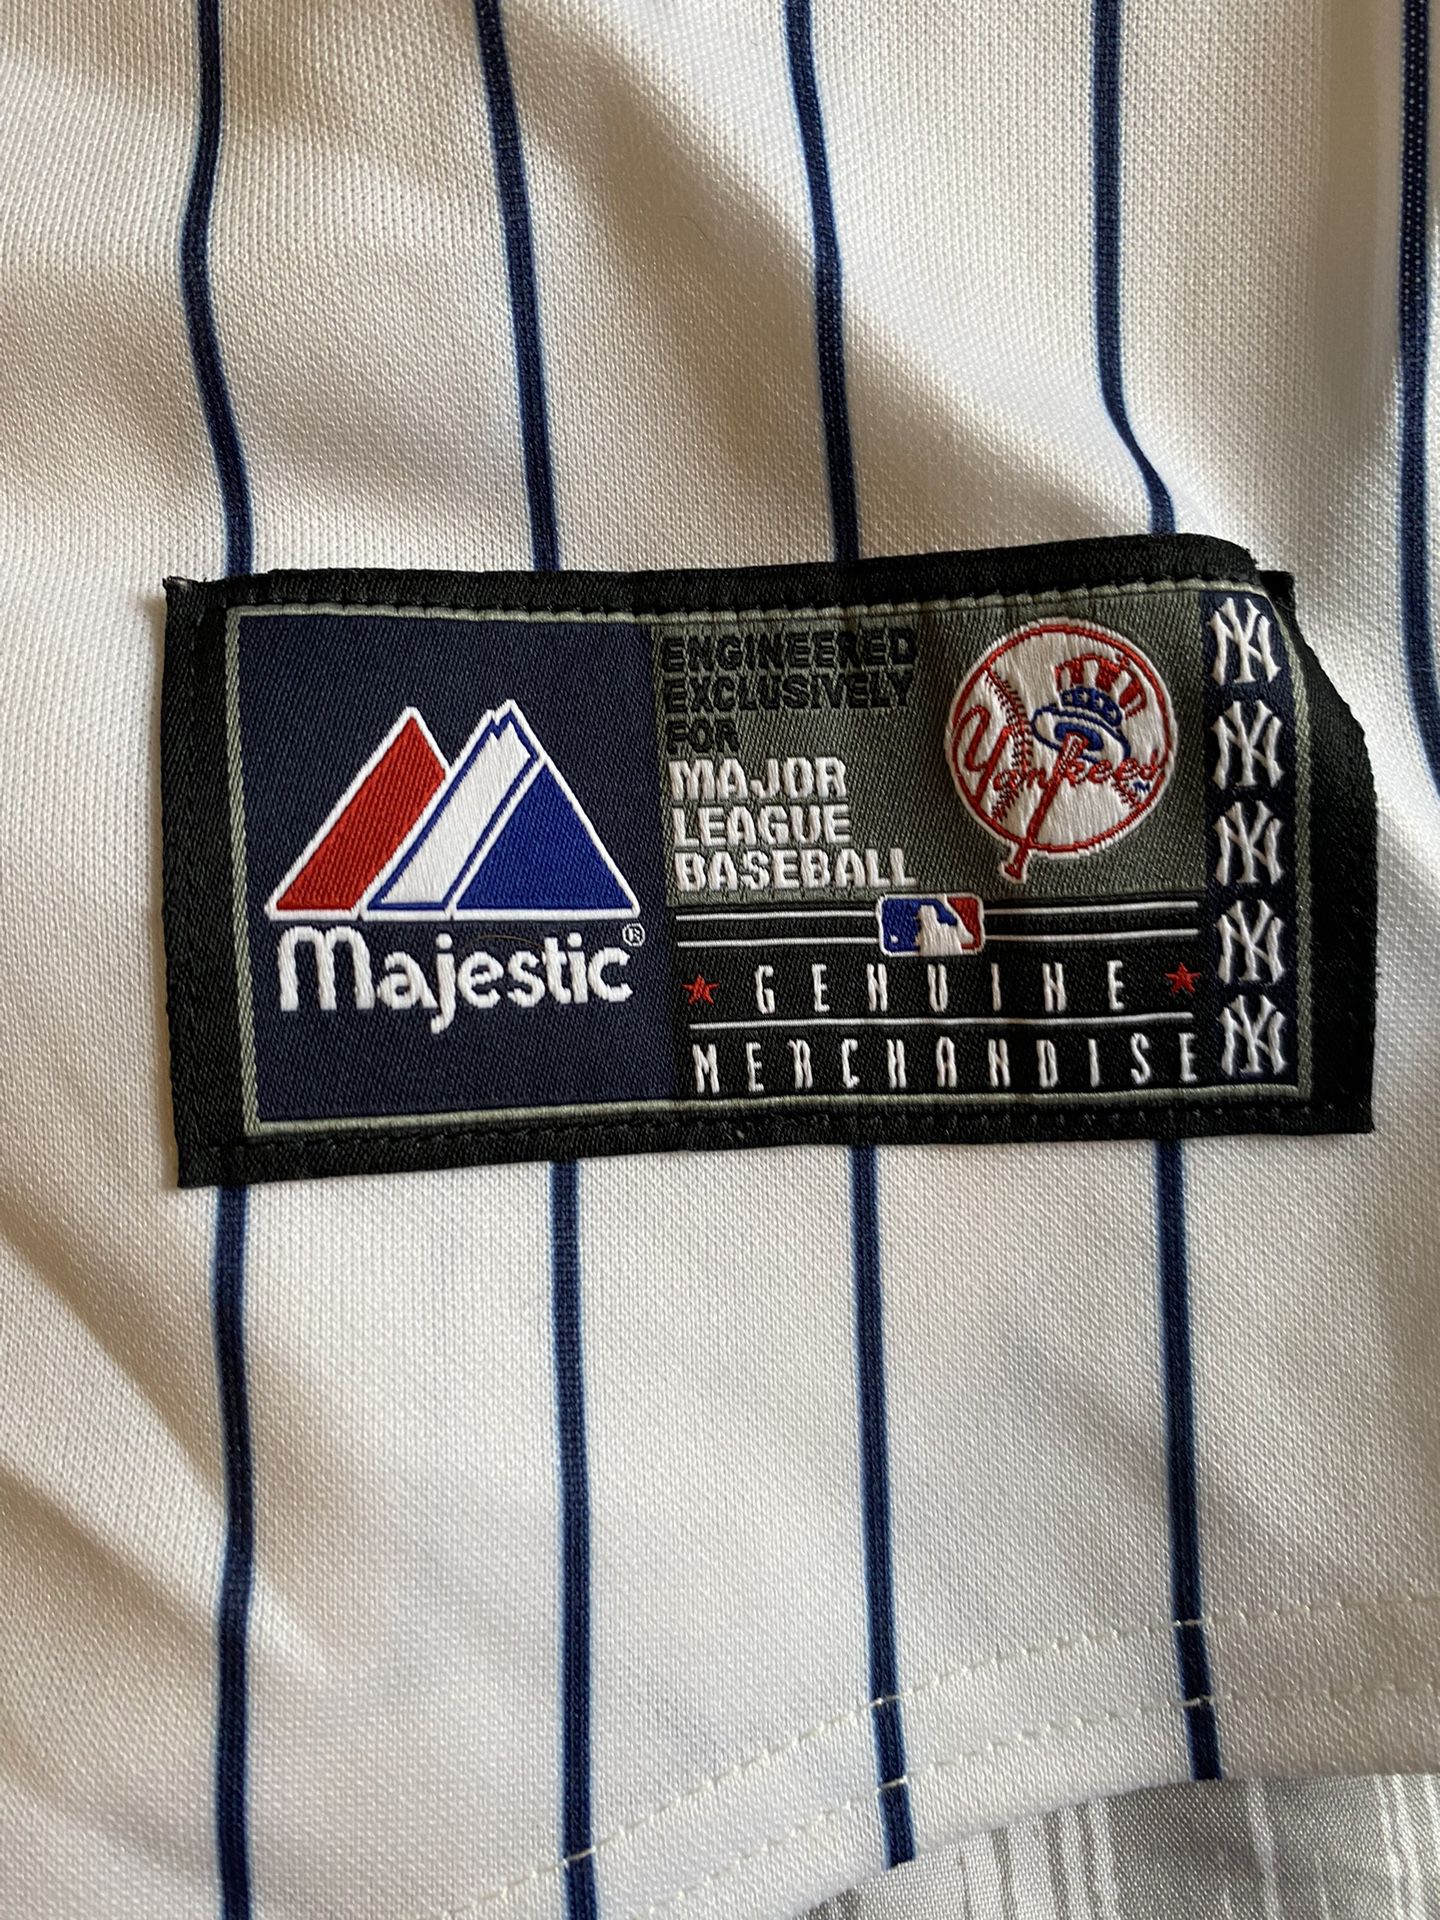 Baseball Jerseys Size 2XL Yankees And Cubs